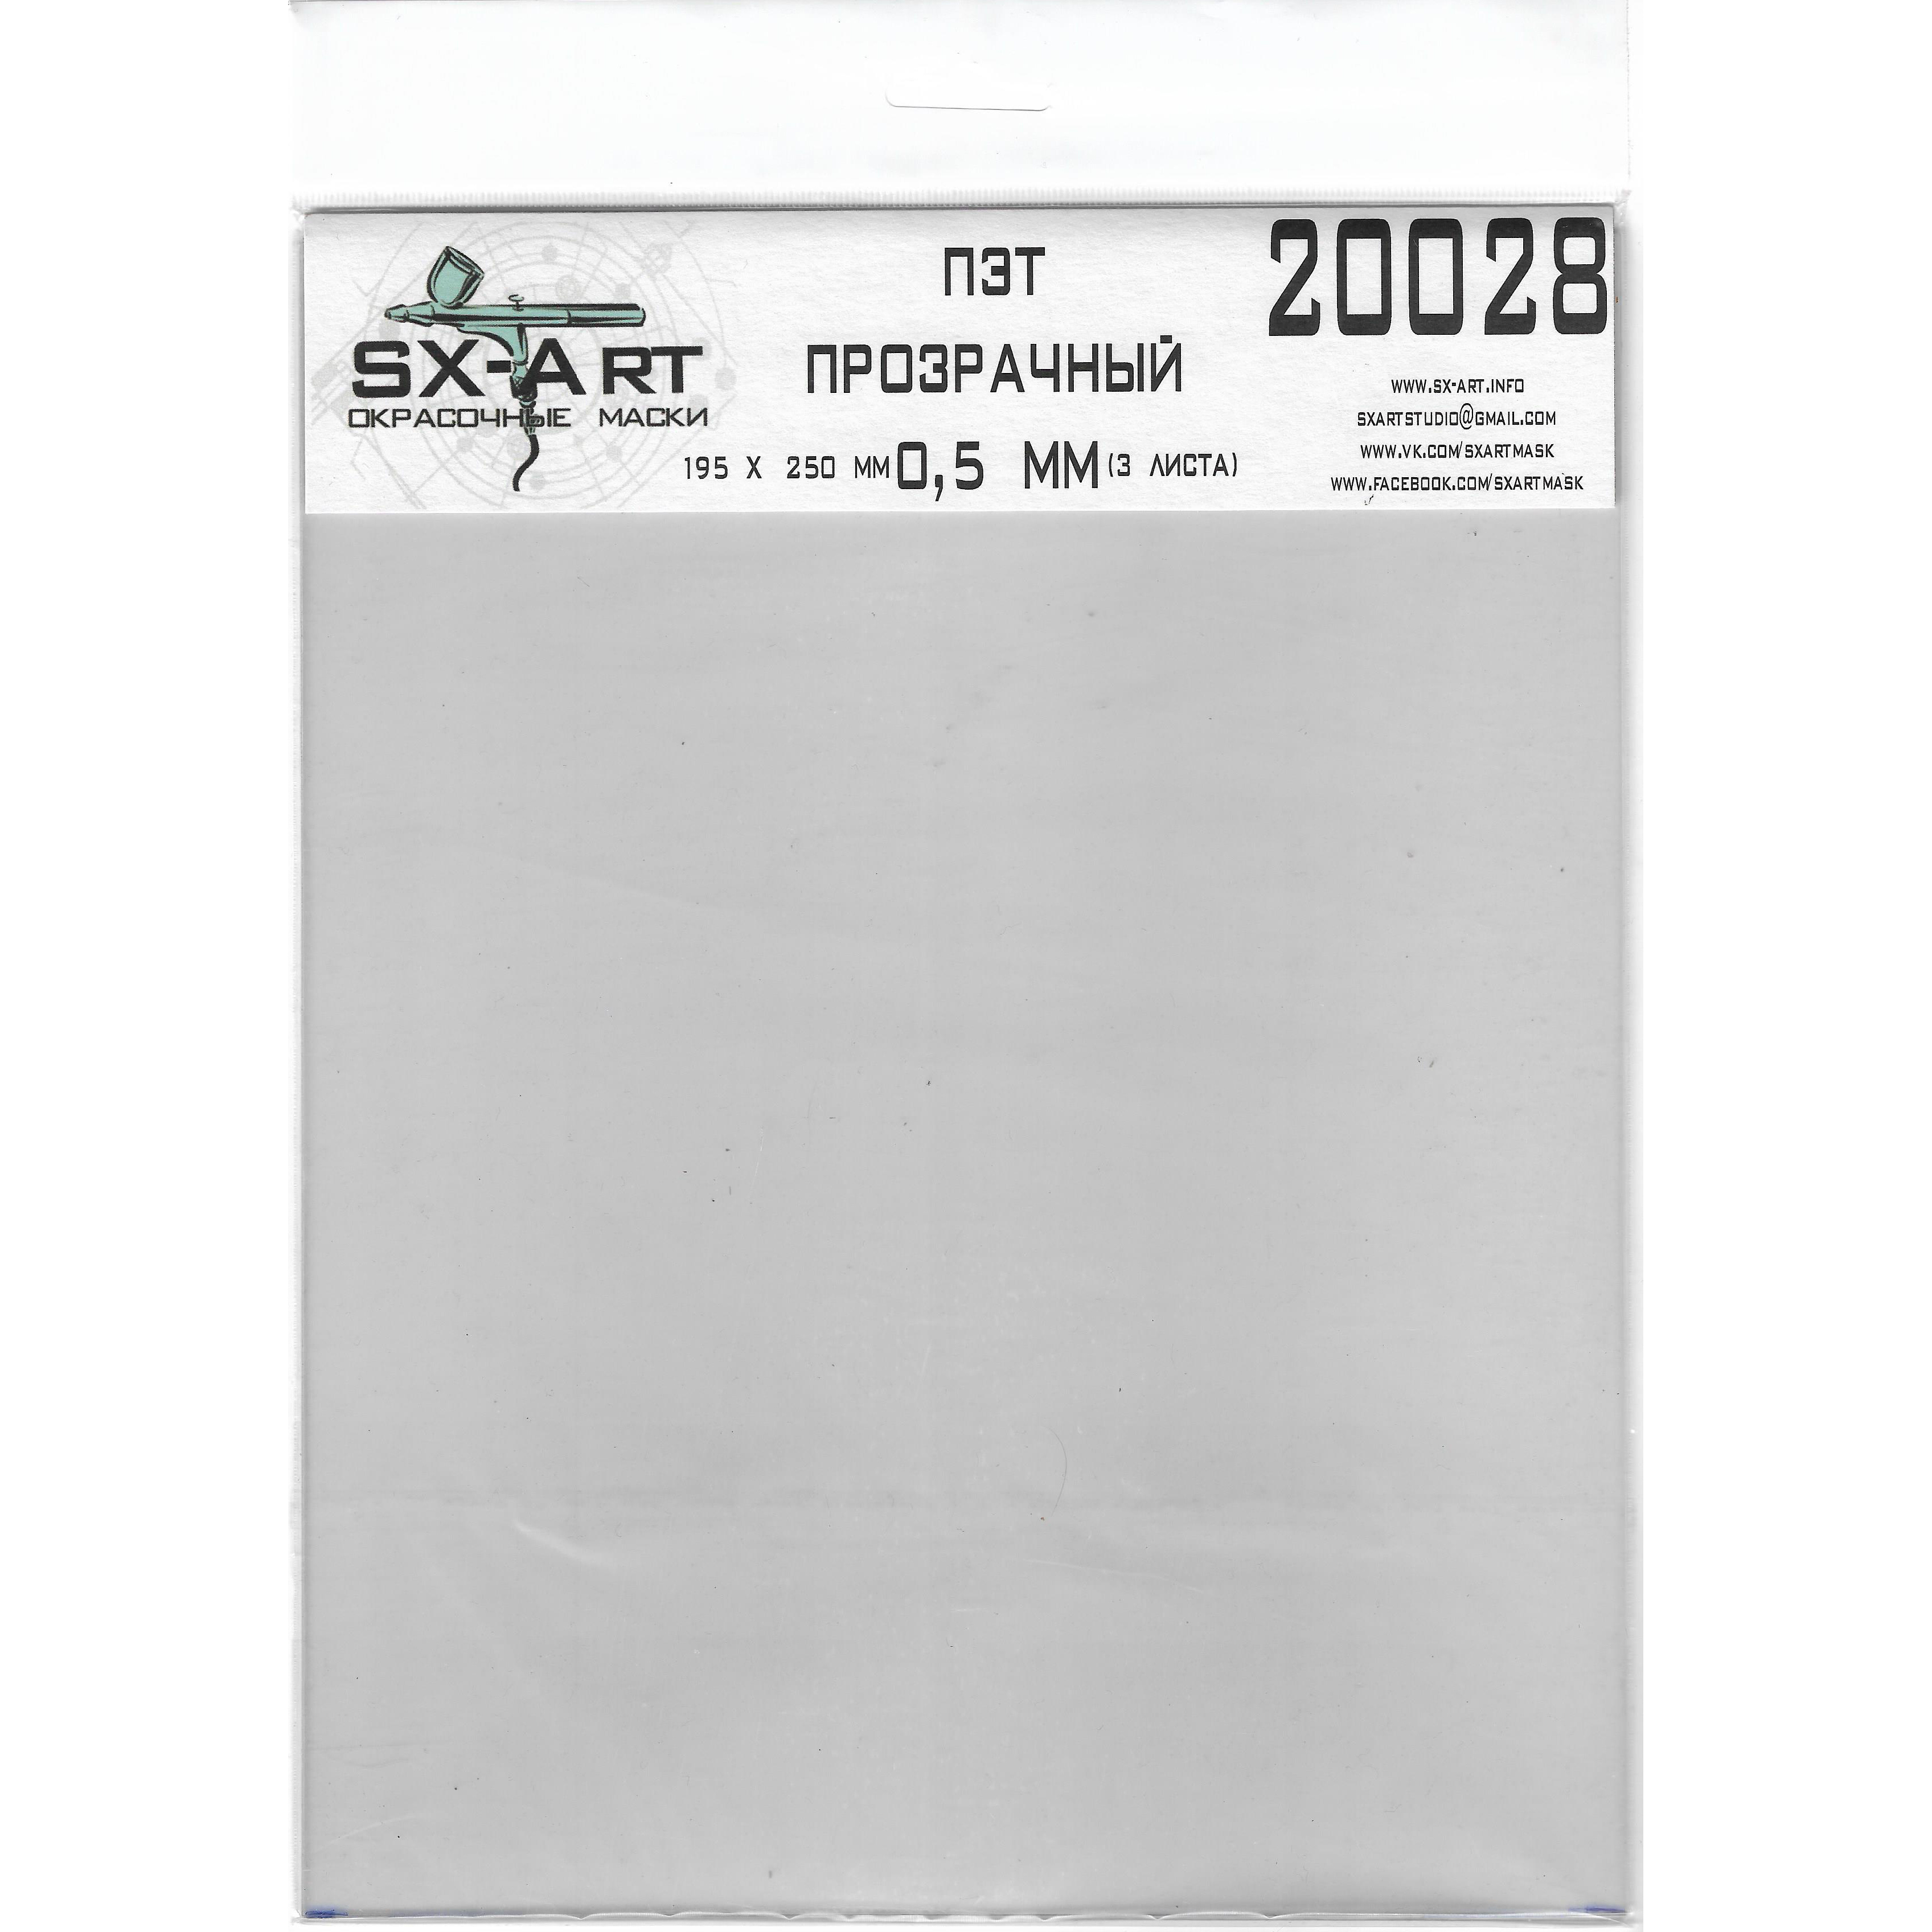 20028 SX-Art PET transparent 0.5 mm 195x250 mm 3 sheets